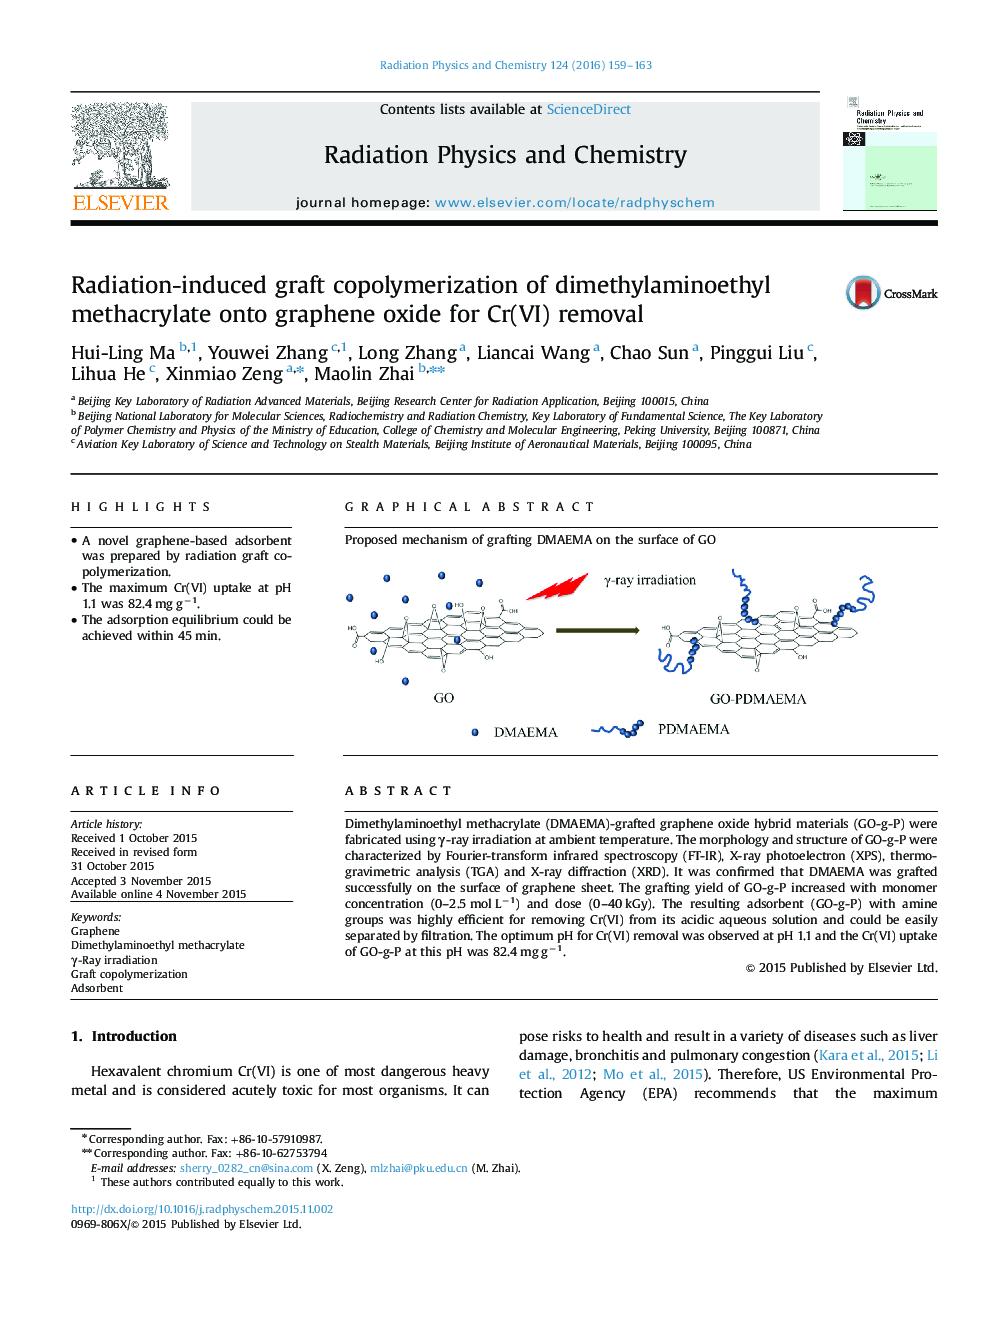 Radiation-induced graft copolymerization of dimethylaminoethyl methacrylate onto graphene oxide for Cr(VI) removal